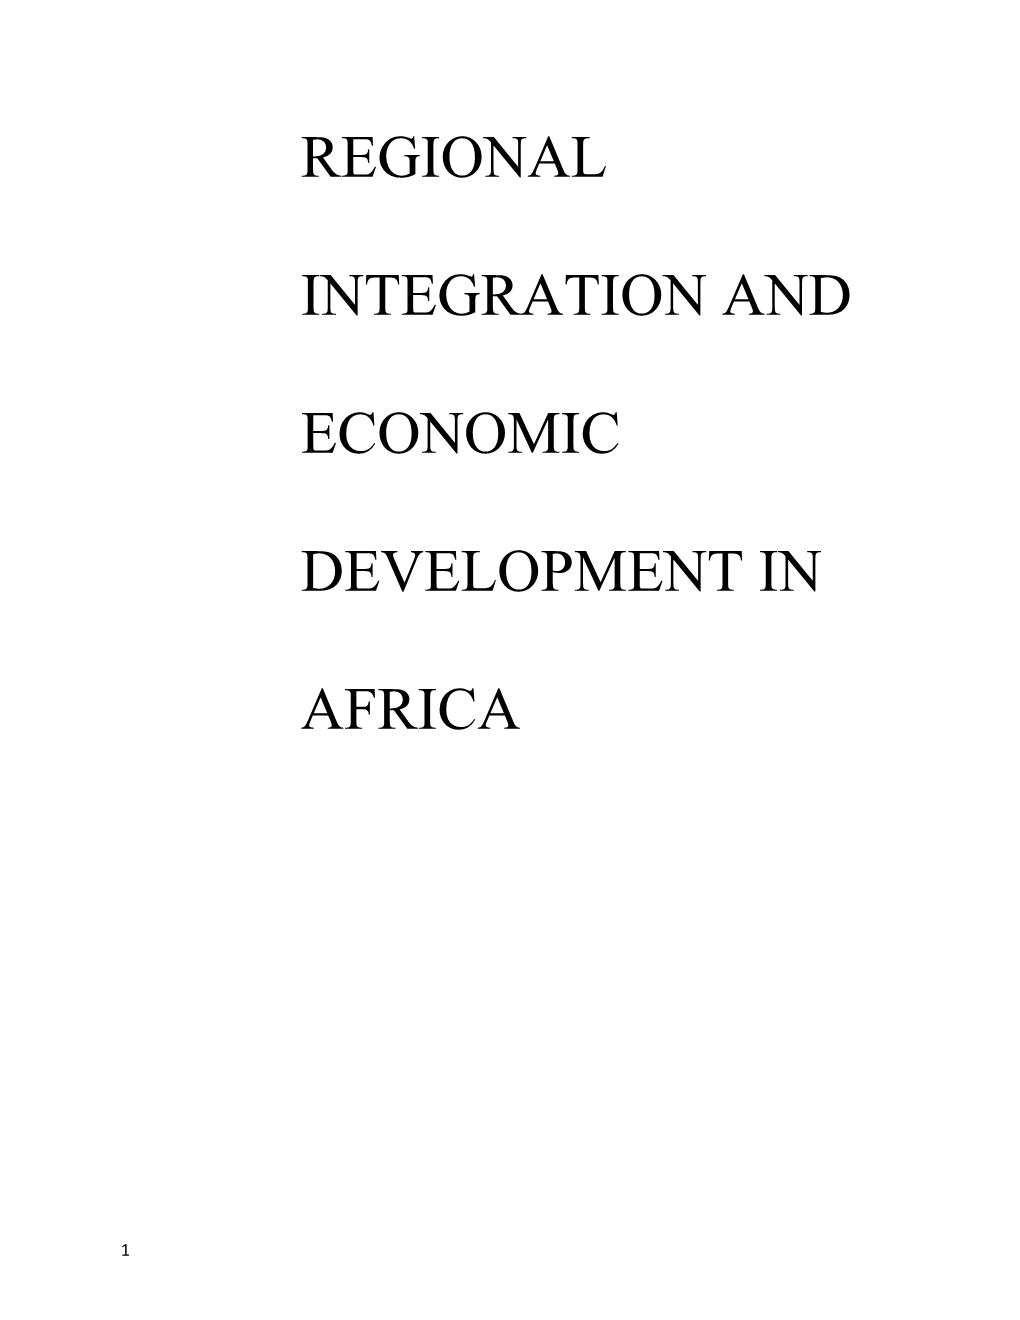 Regional Integration and Economic Development in Africa